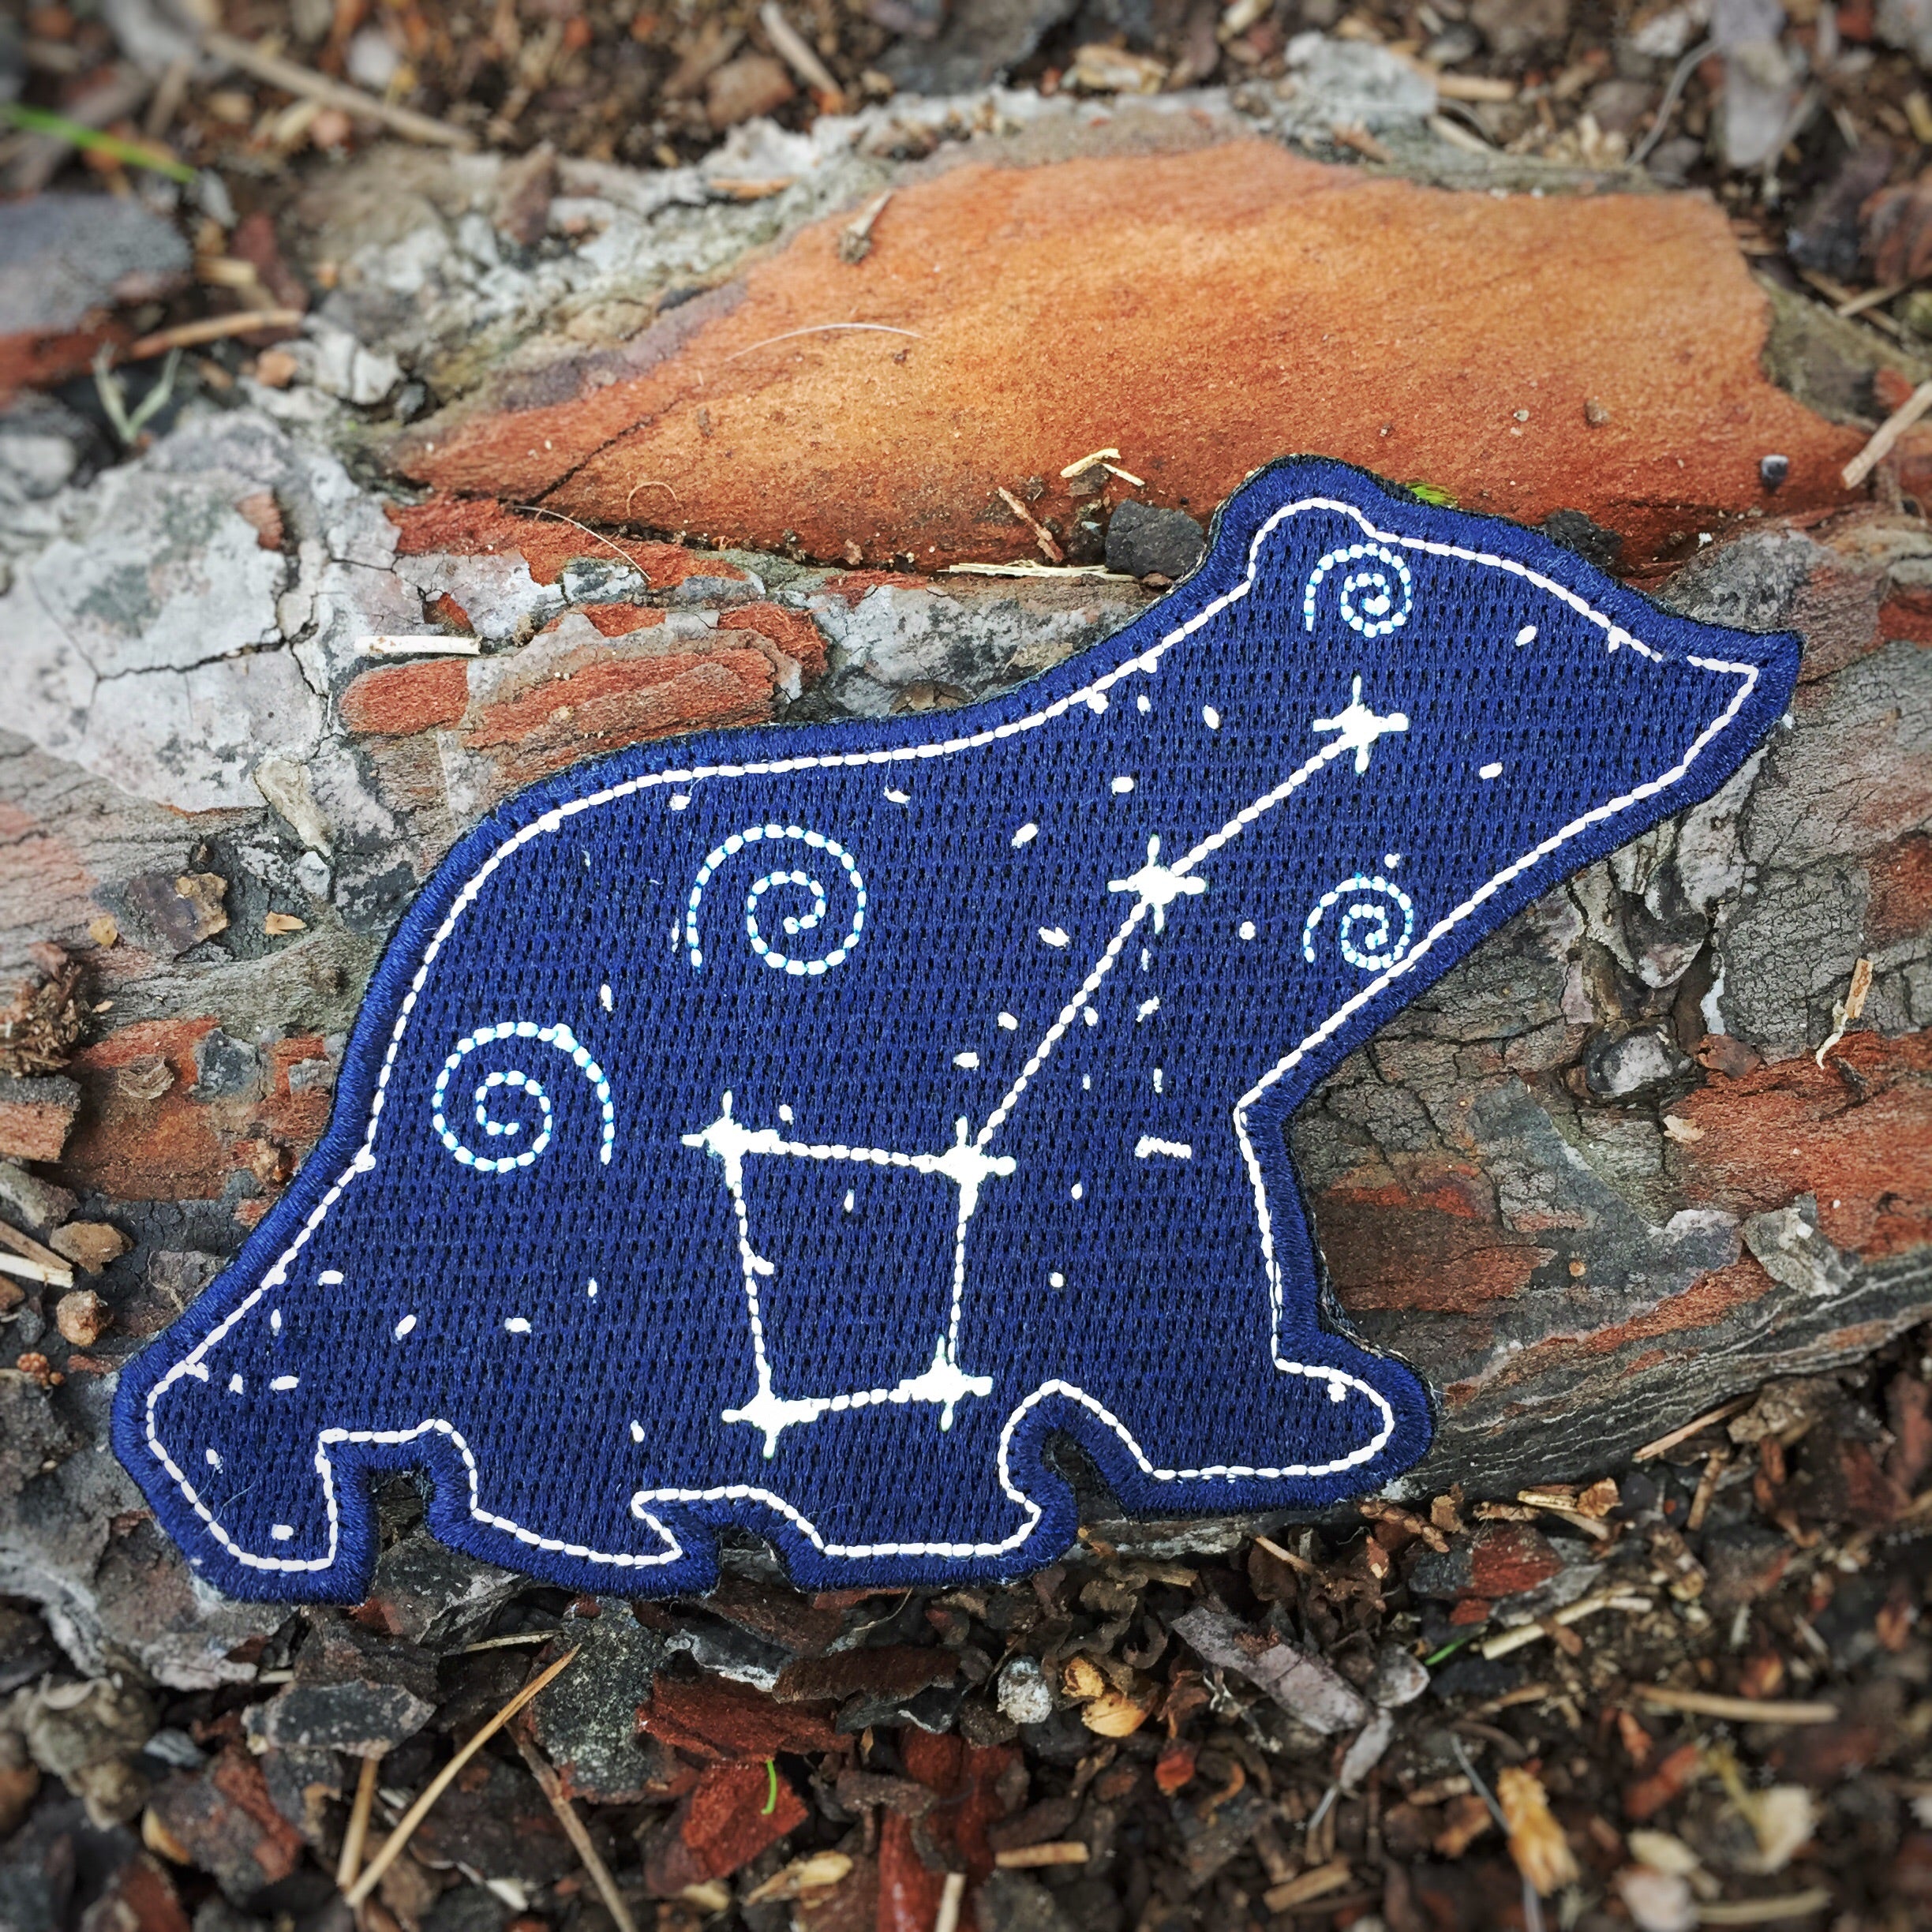 little bear constellation